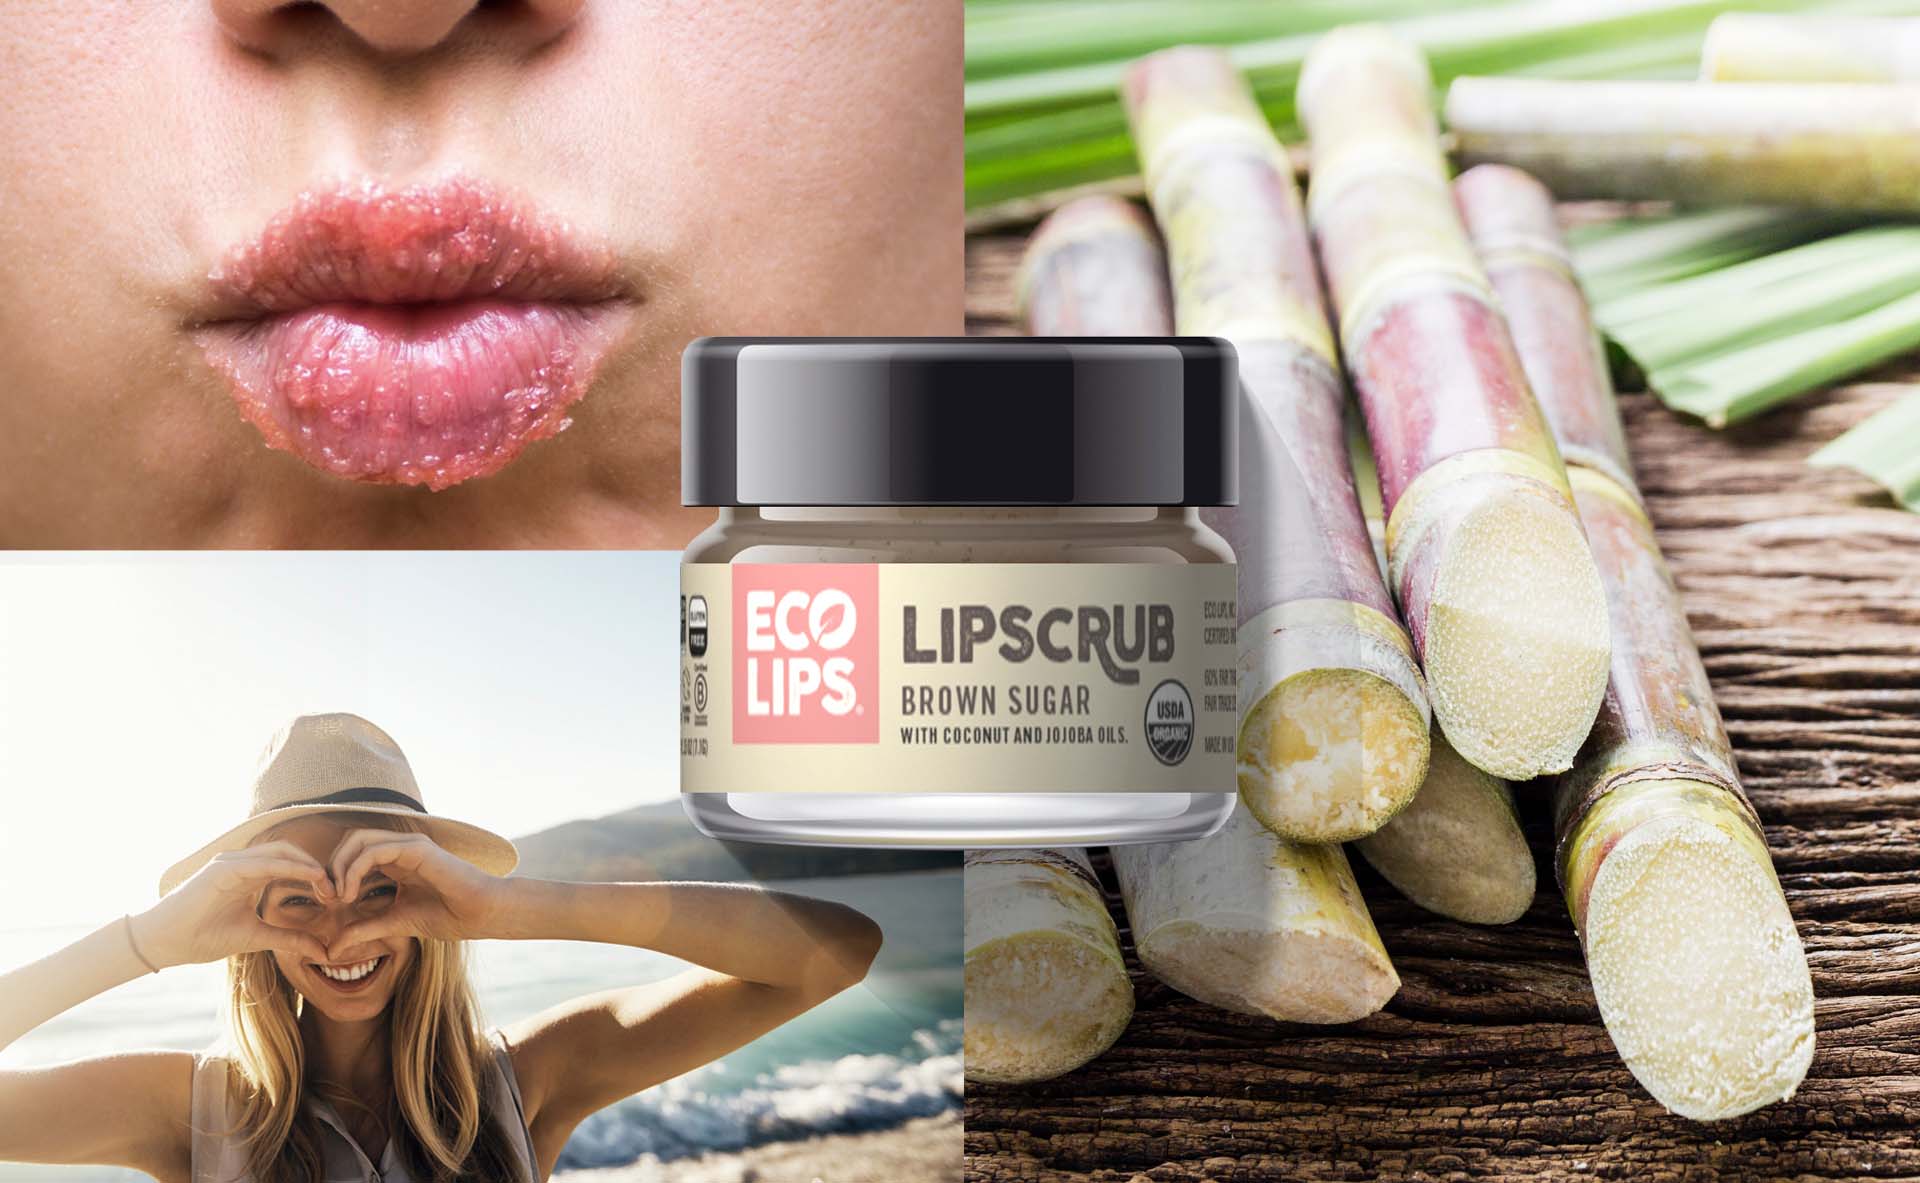 Eco Lips Lip Scrub product promotion